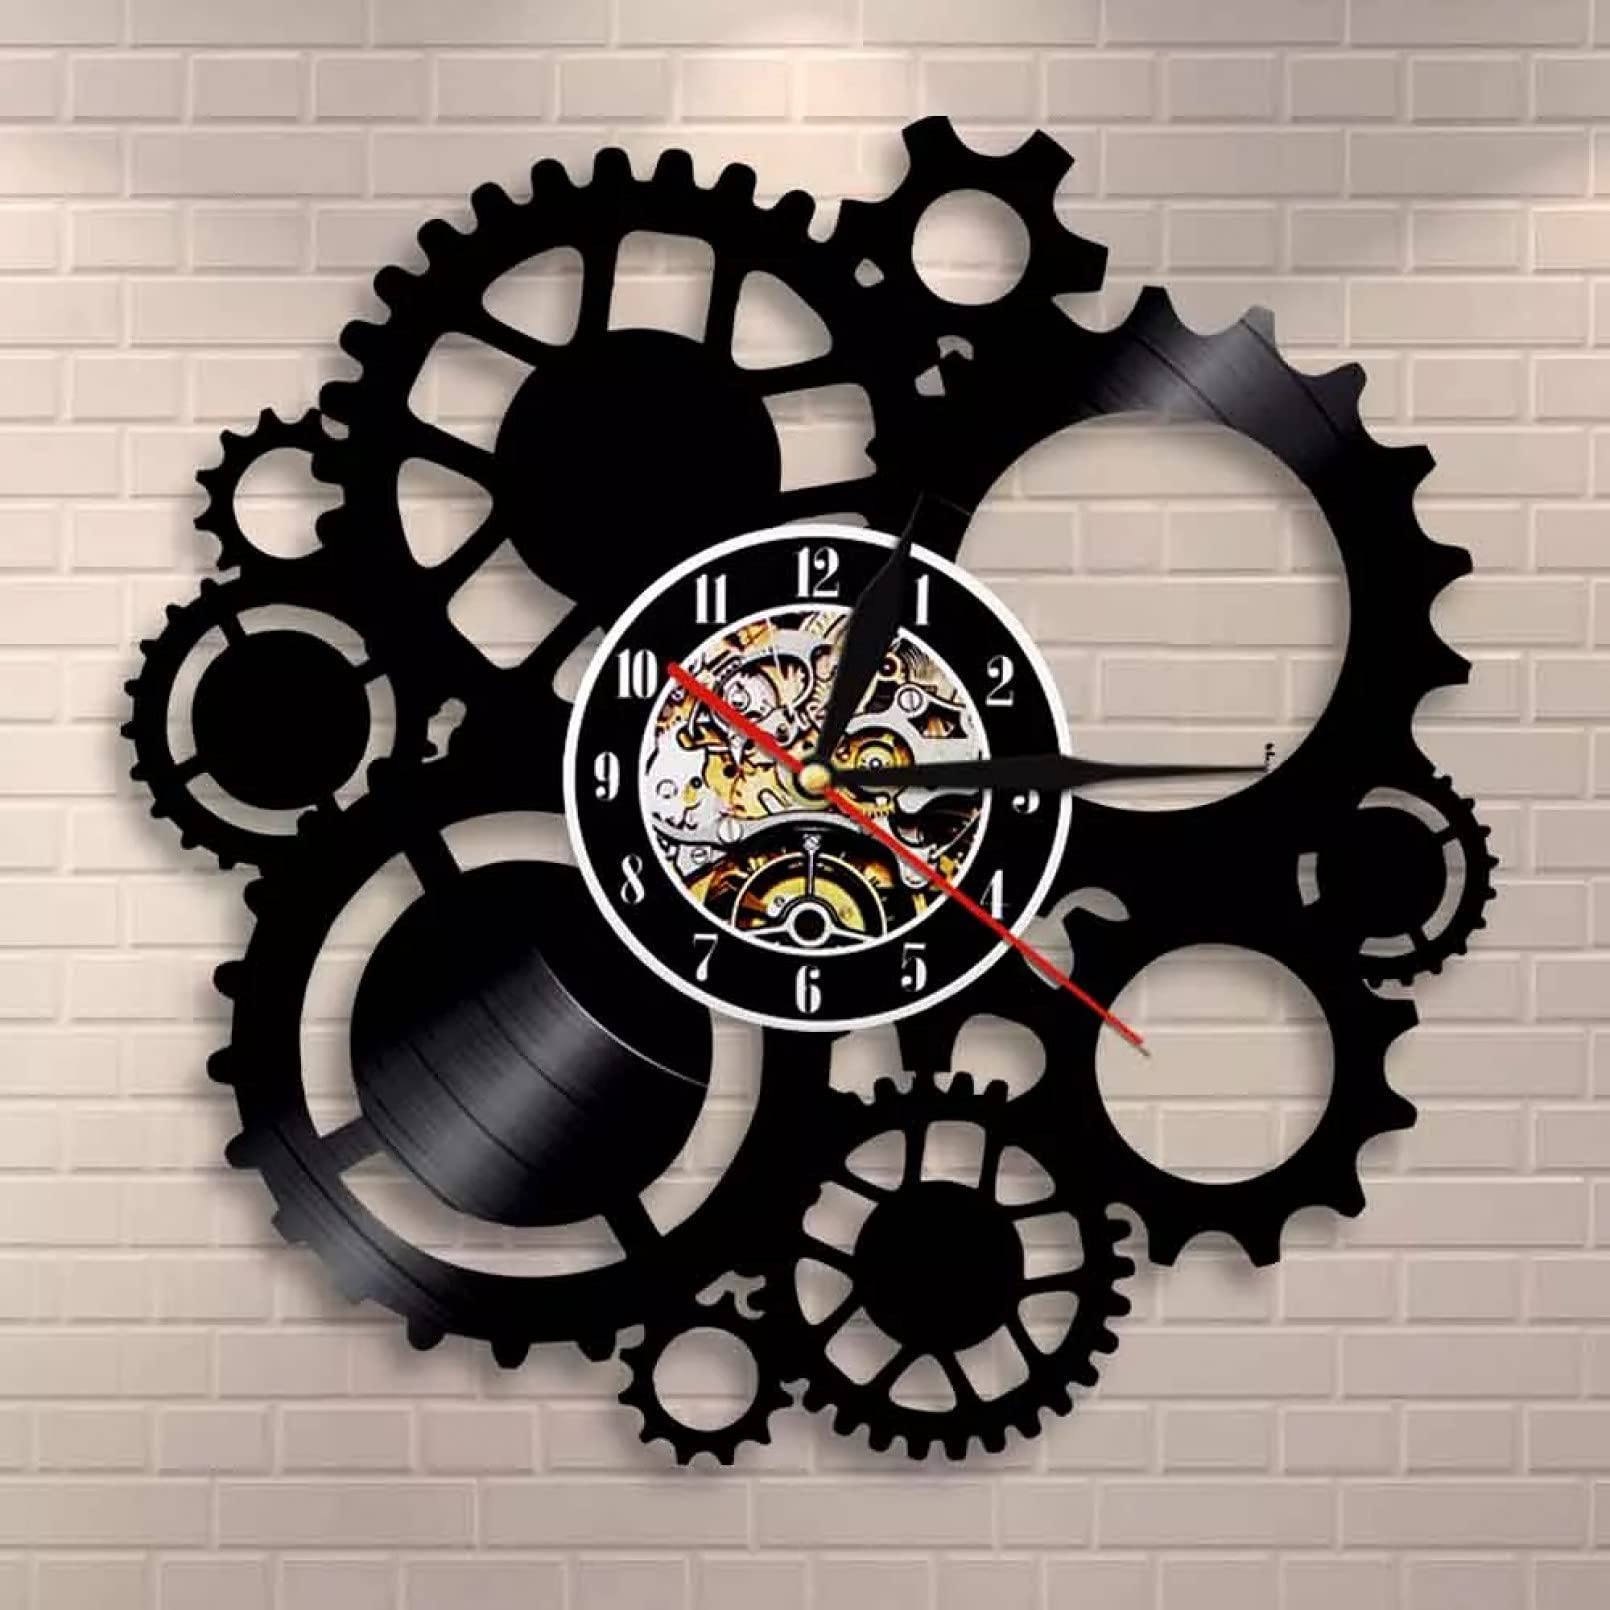 Steampunk Wall Decor Wall Clock Victorian Industrial Gears Vinyl Record Wall Clock Gears and Cogs Decorative Clock